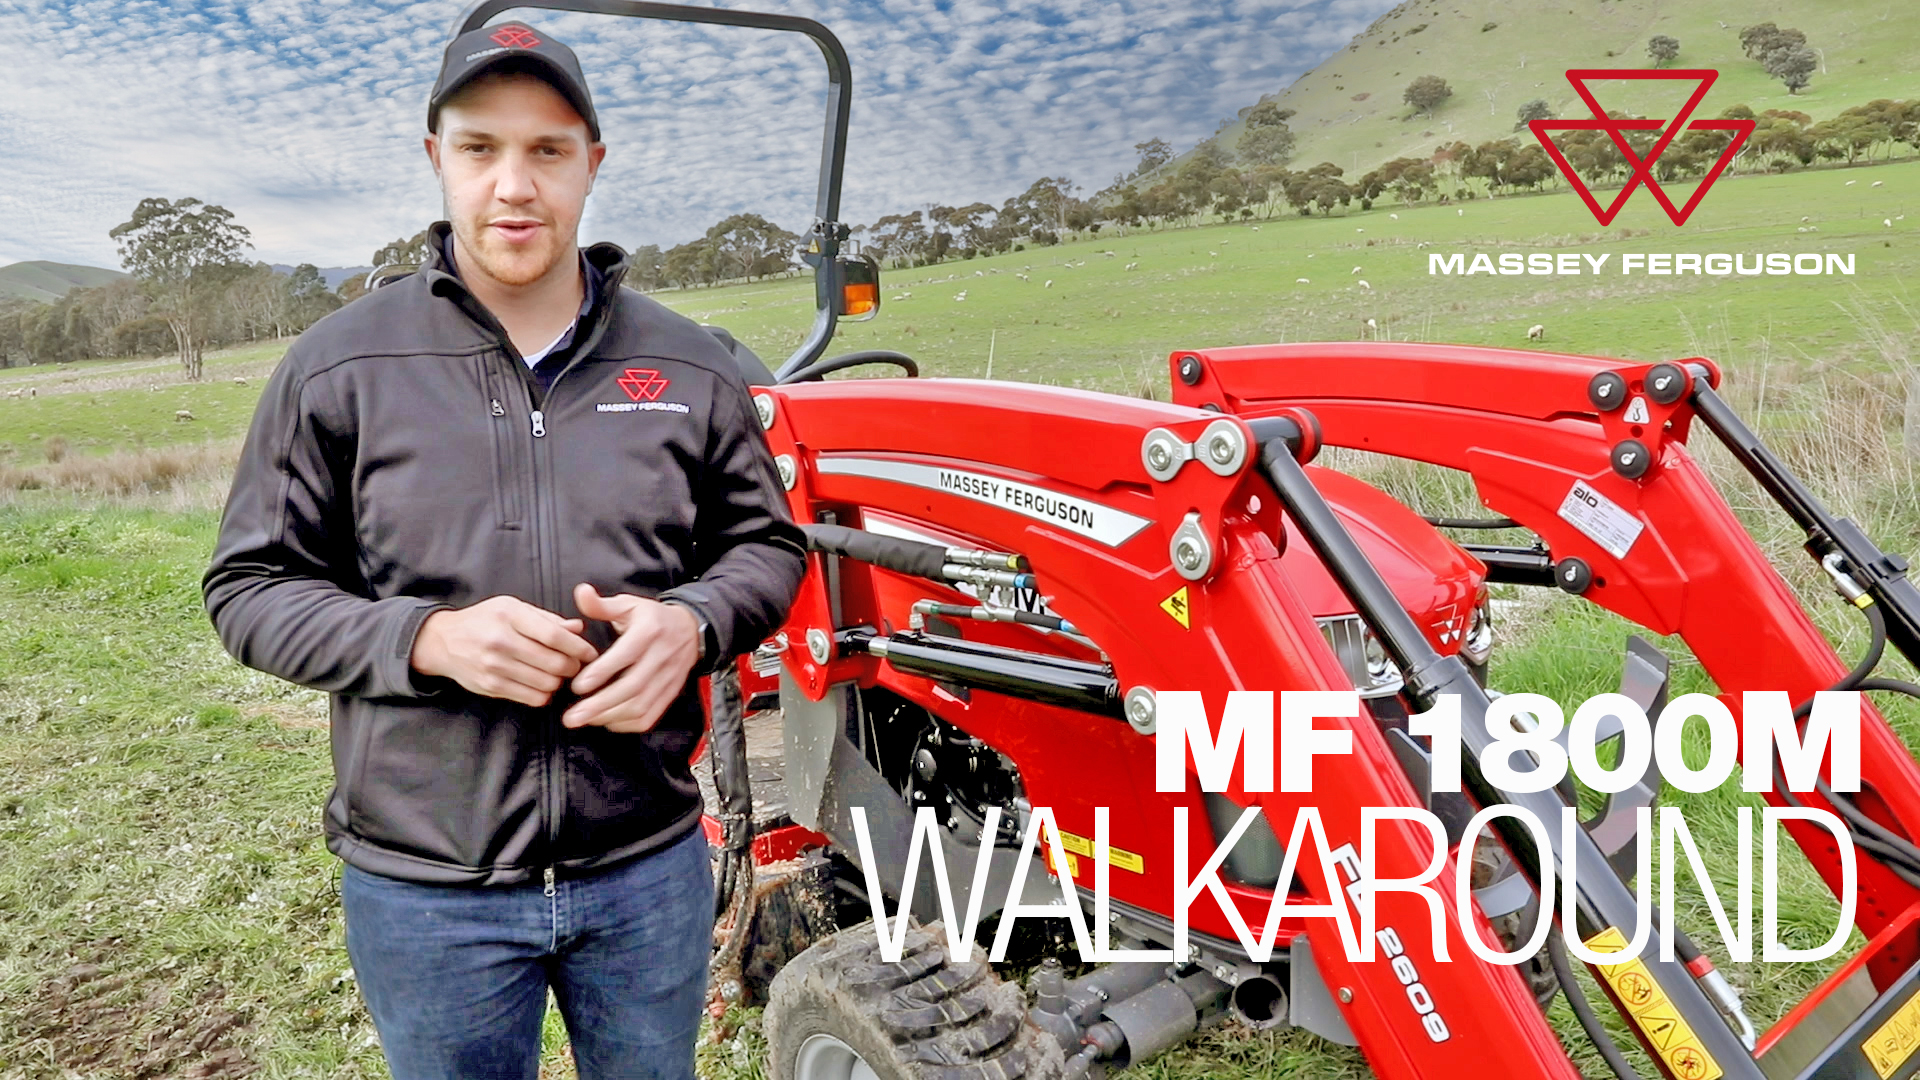 MF 1800 M Series Compact Tractor Walkaround Video